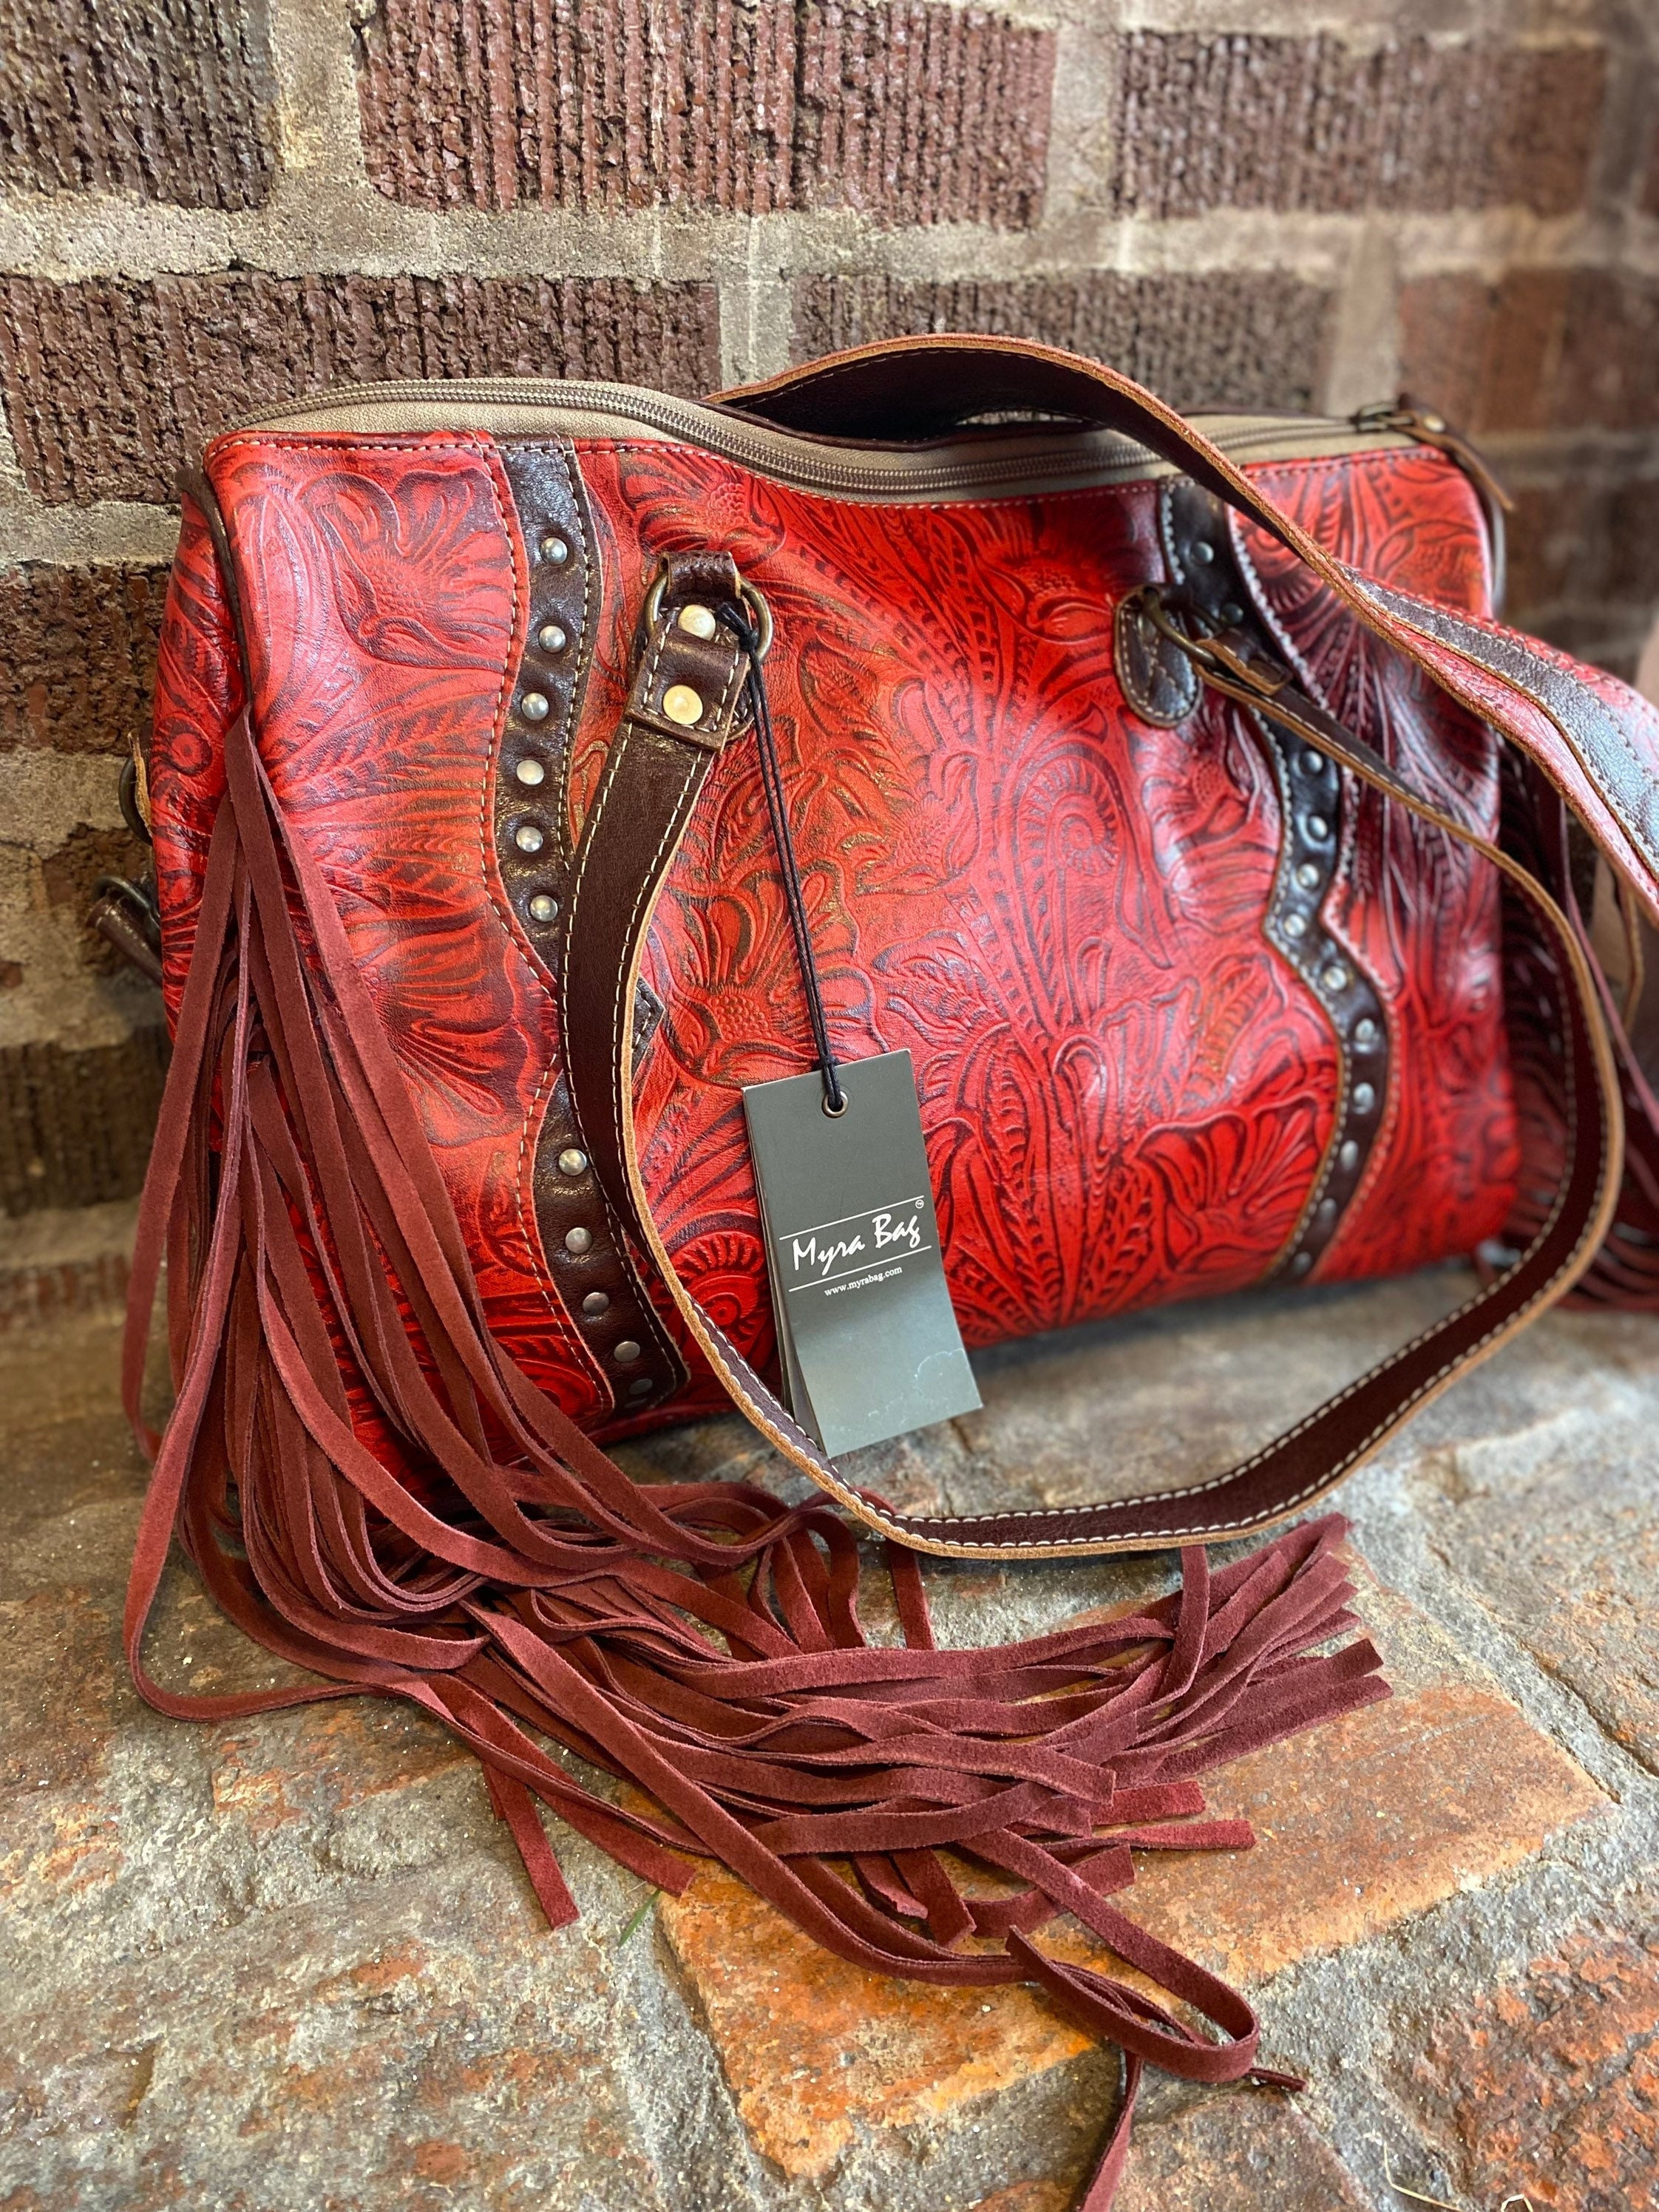 Leather Suede Orange Fringe Bag purse western and native American style |  eBay